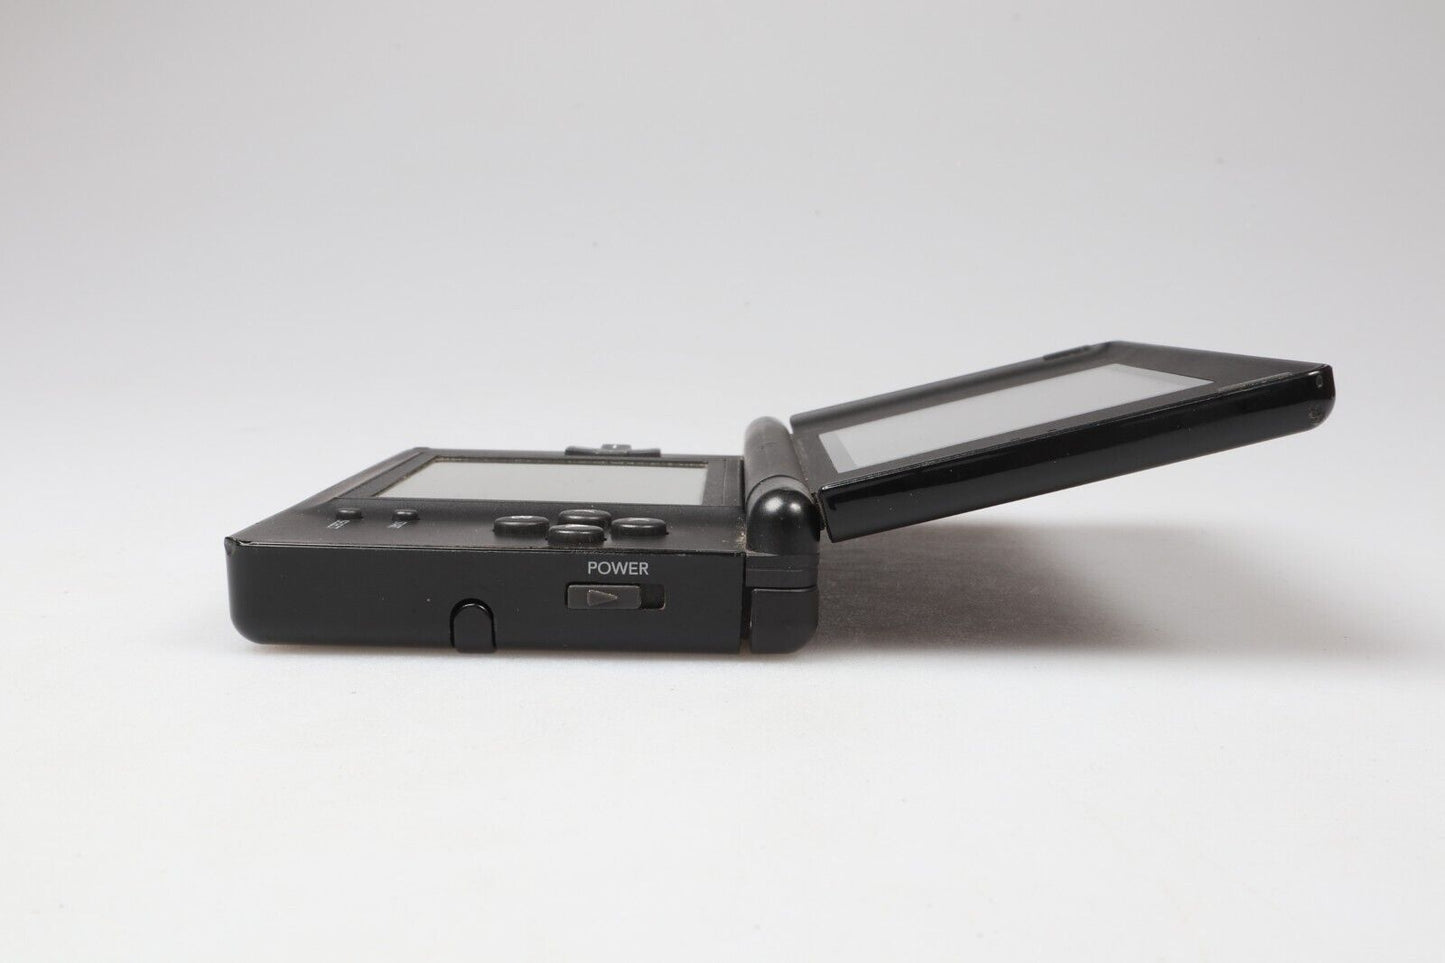 Nintendo DS Lite | USG-001 | Black | Handheld